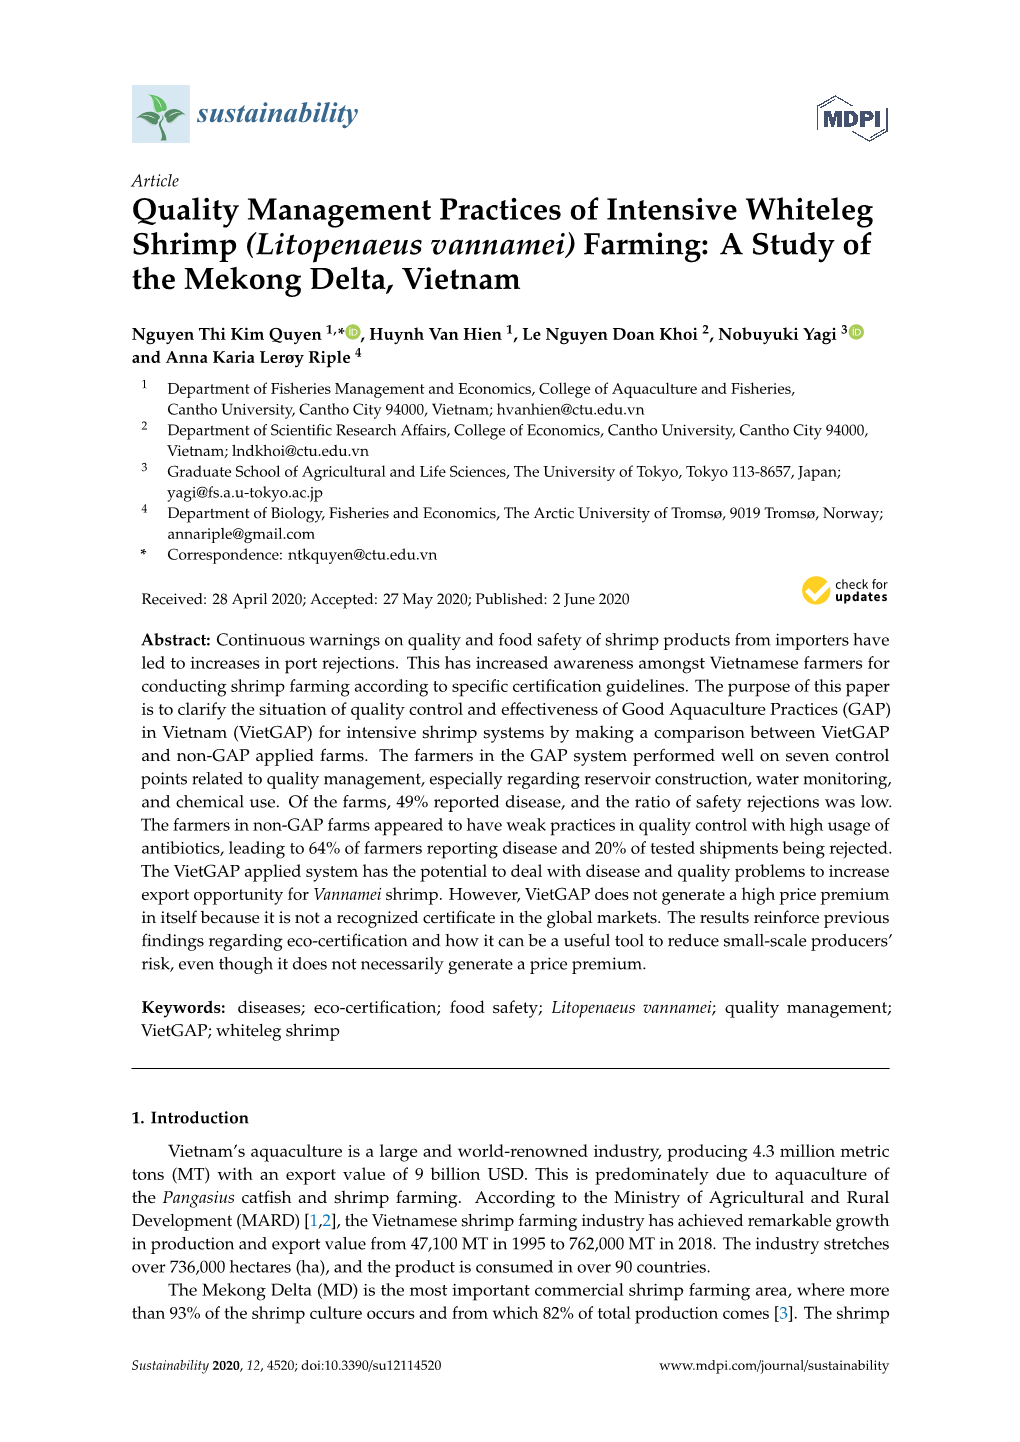 Quality Management Practices of Intensive Whiteleg Shrimp (Litopenaeus Vannamei) Farming: a Study of the Mekong Delta, Vietnam